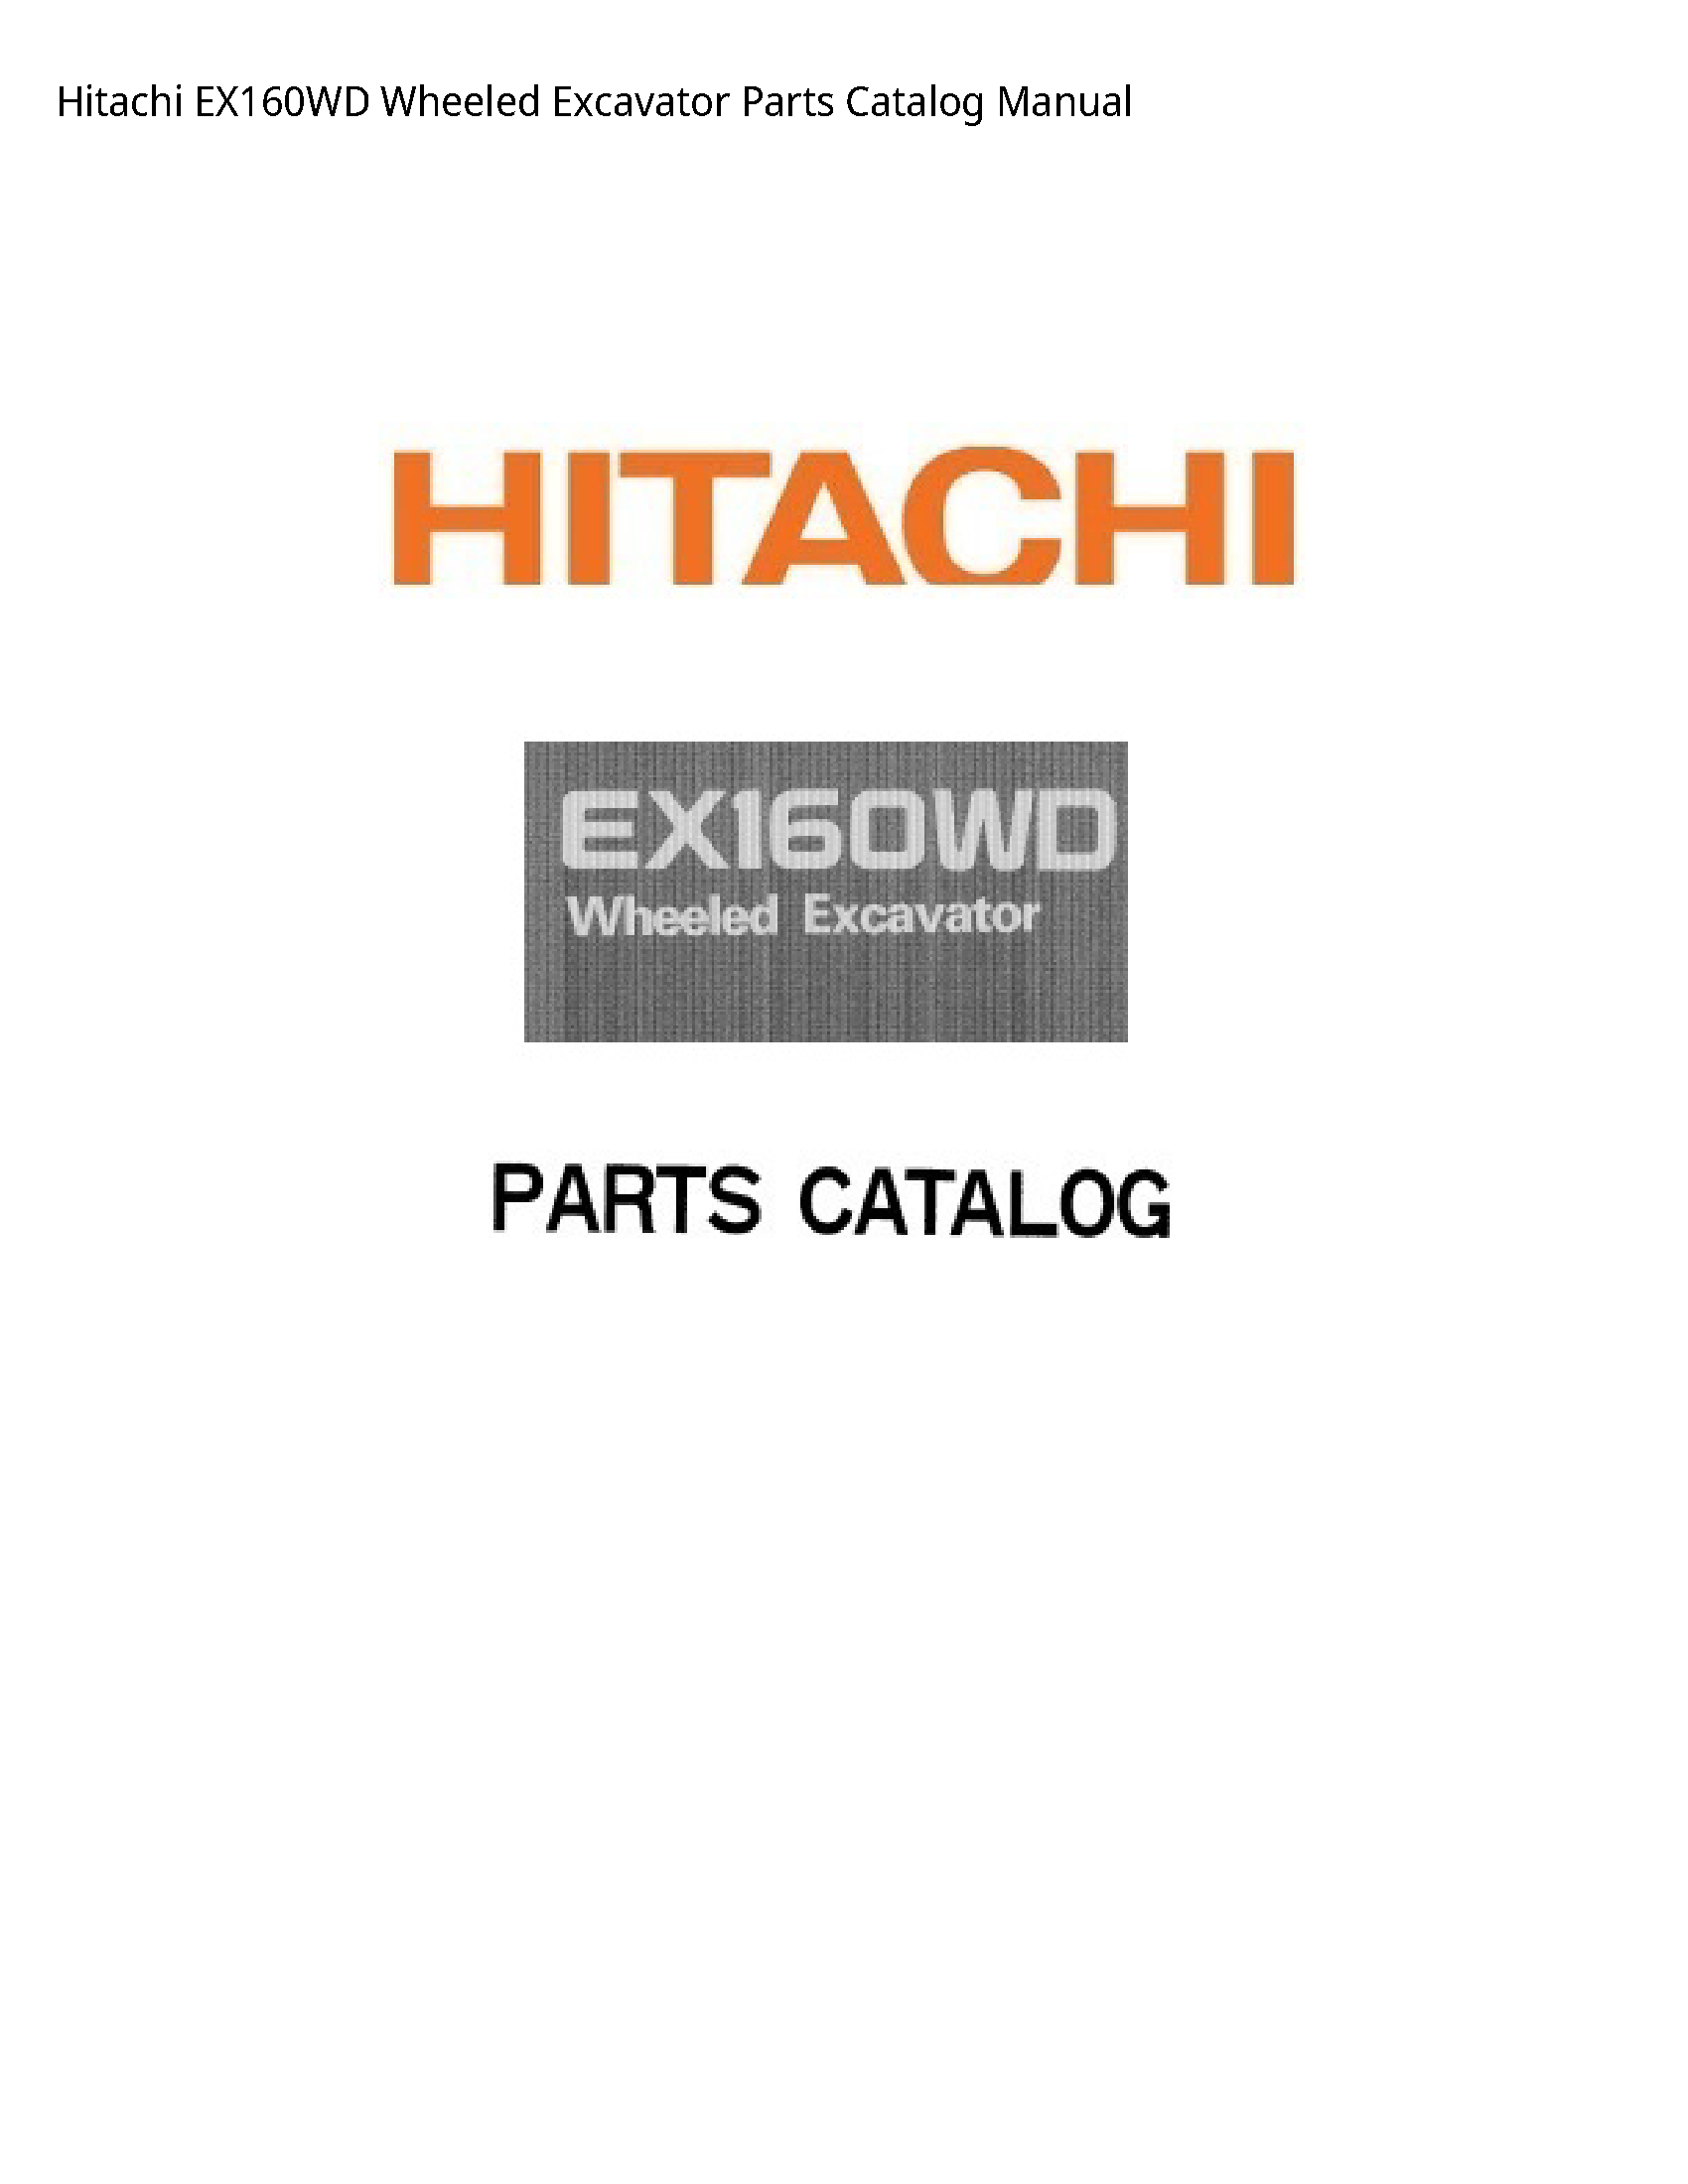 Hitachi EX160WD Wheeled Excavator Parts Catalog manual